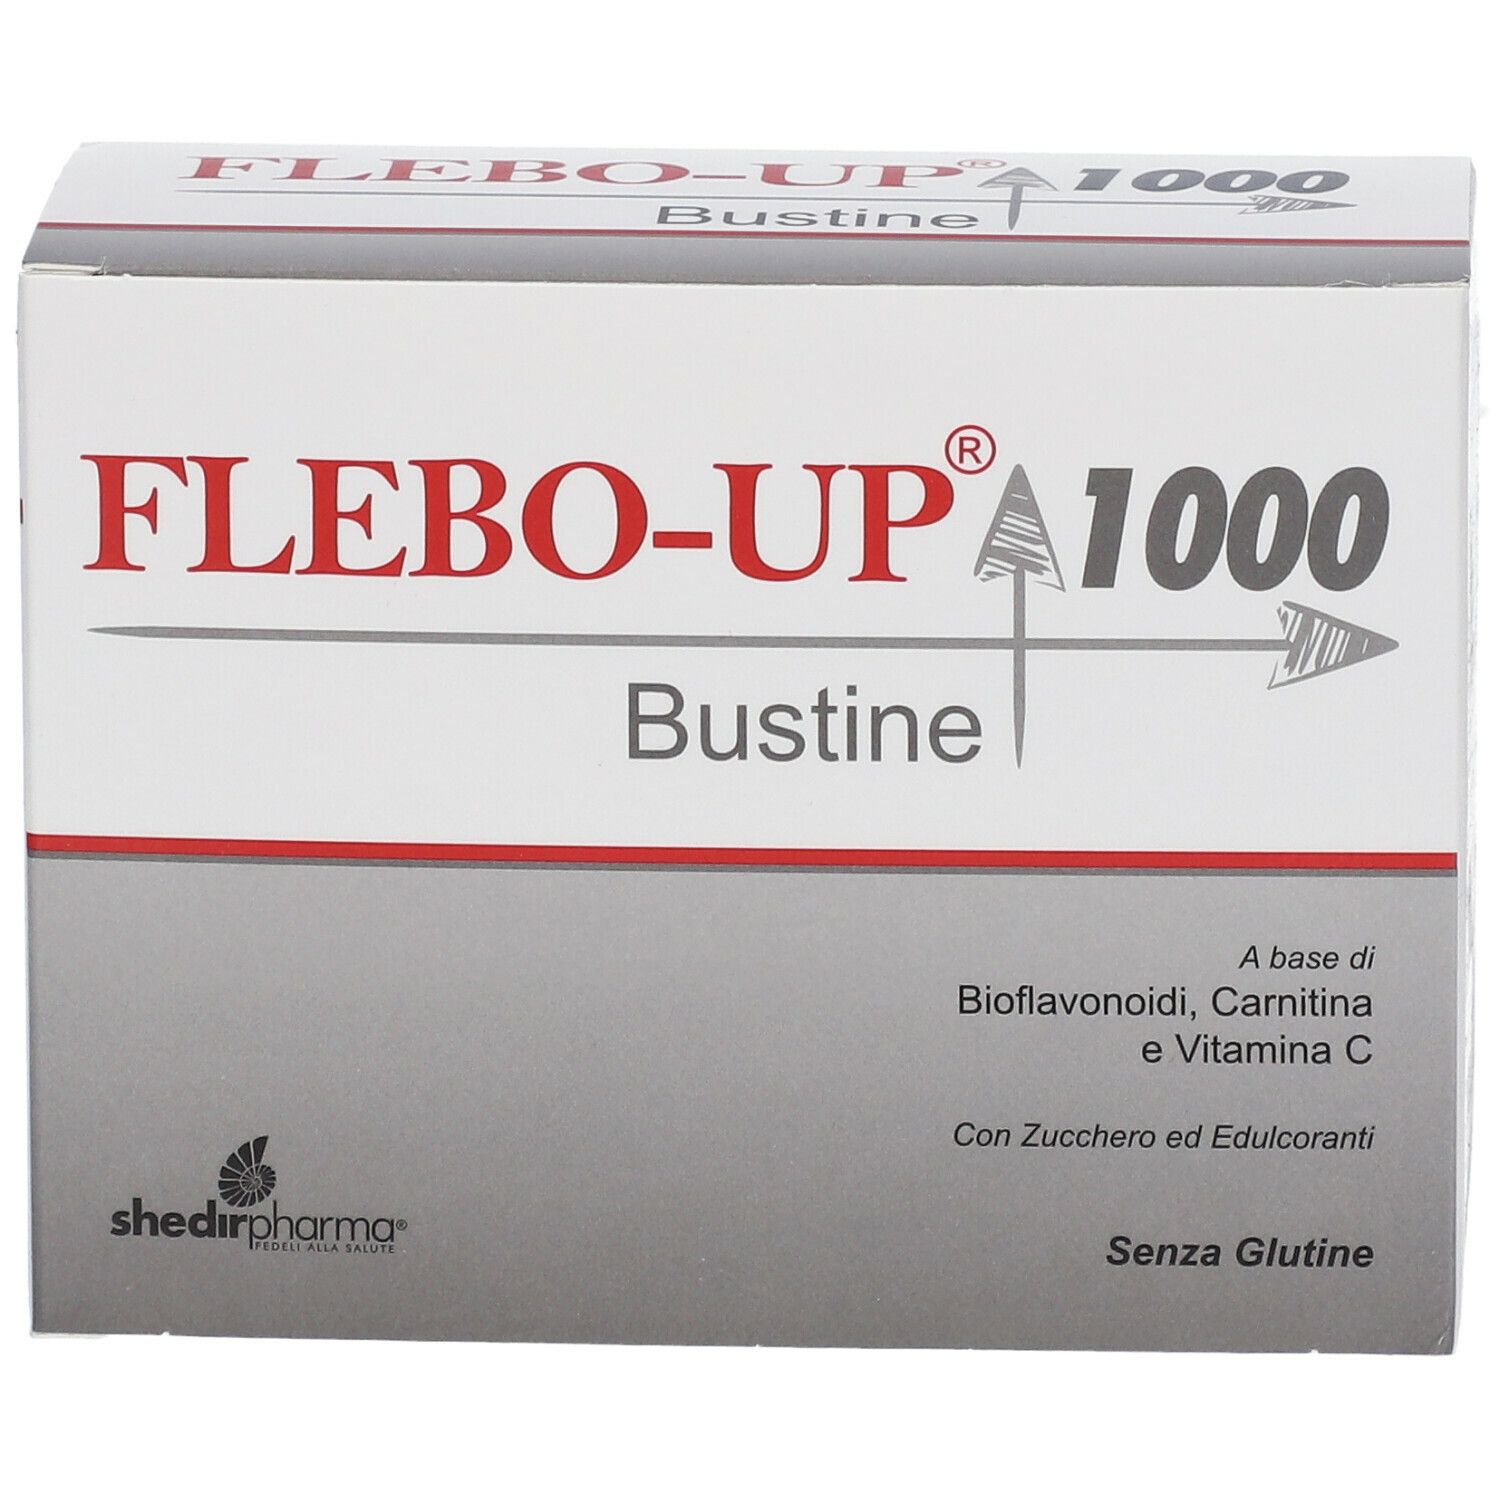 Flebo-Up® 1000 Bustine